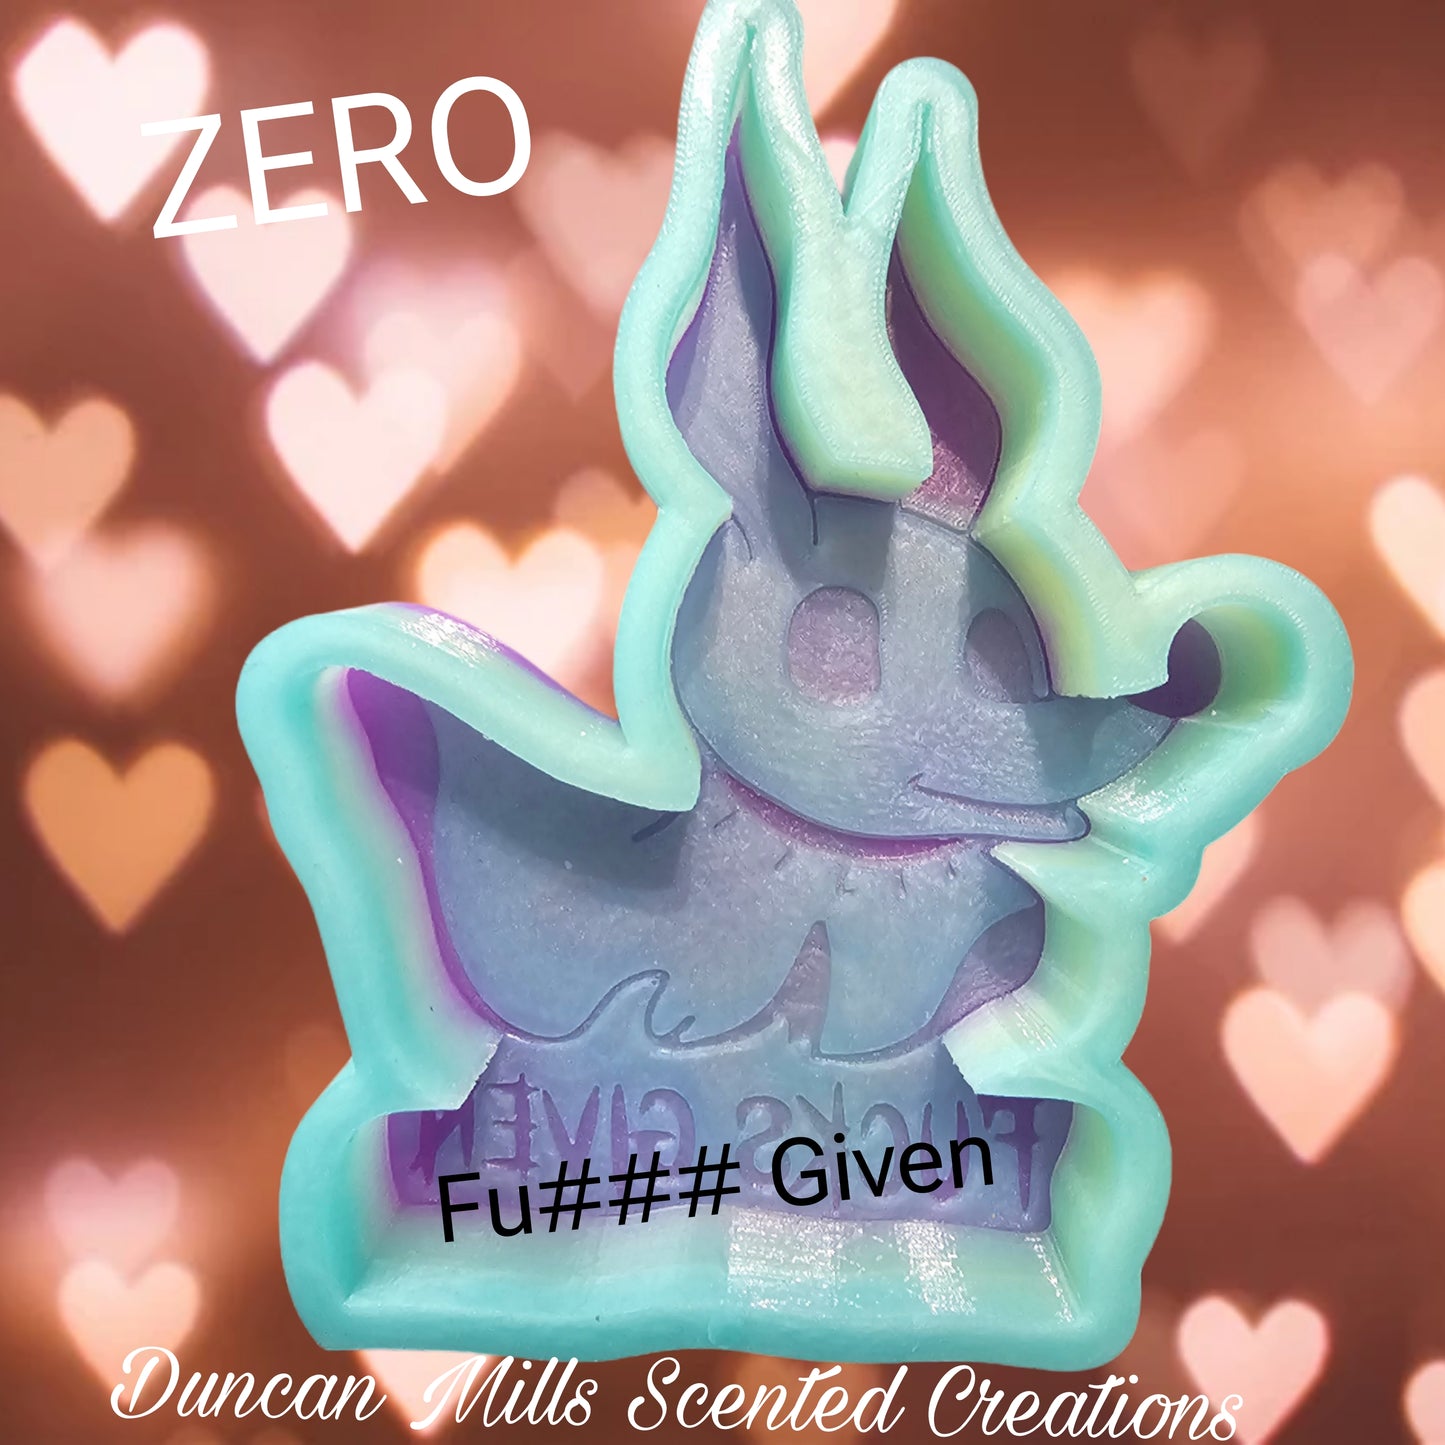 Zero ##### Given